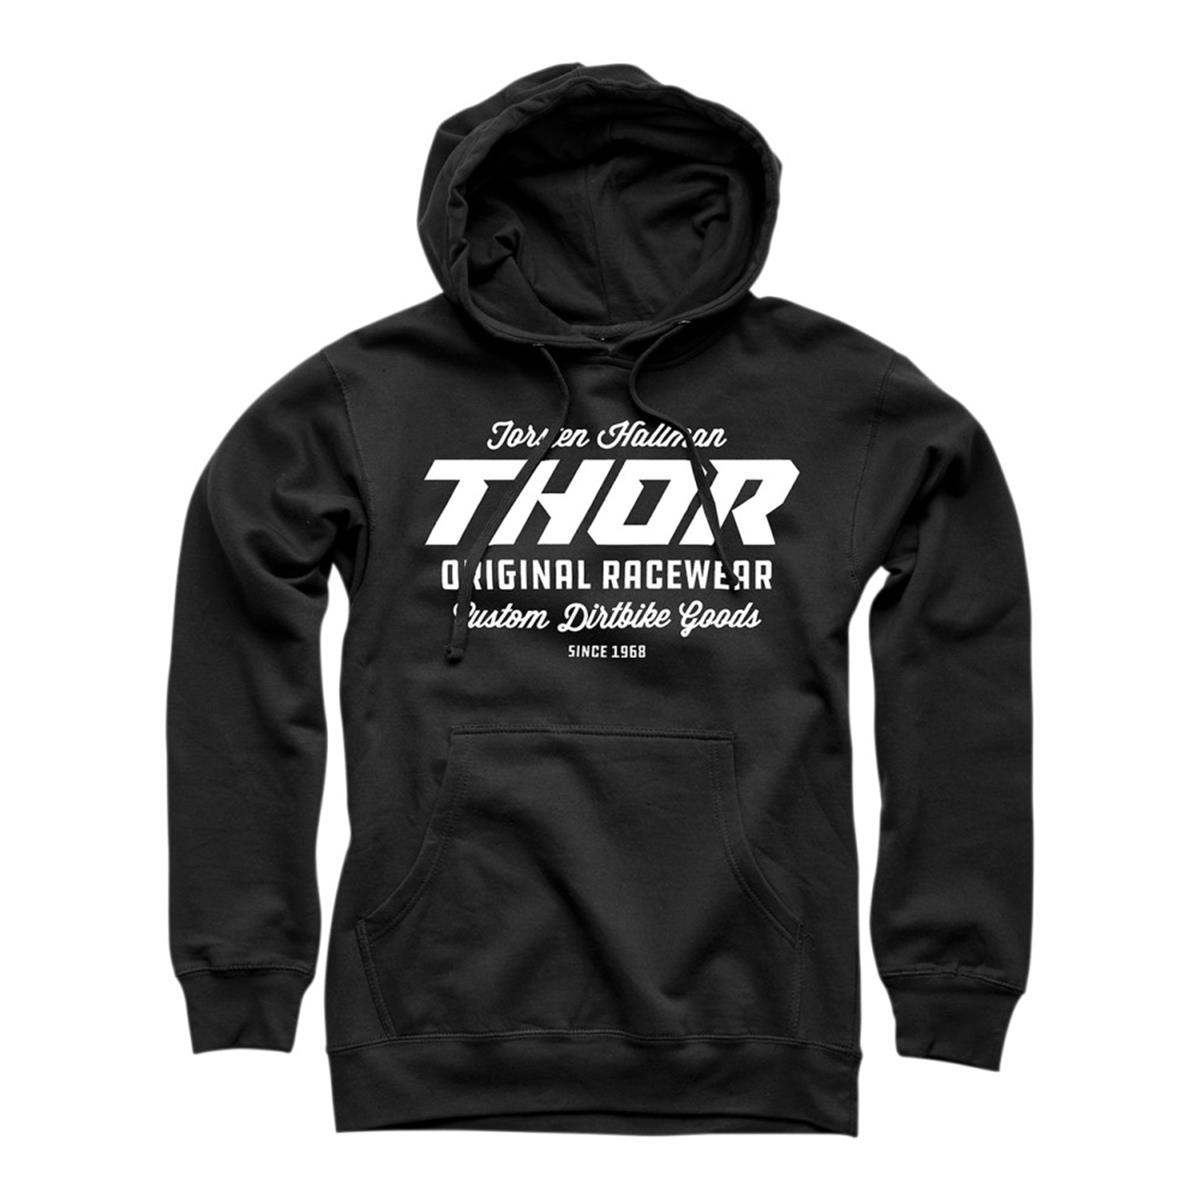 Thor Hoody The Goods Black